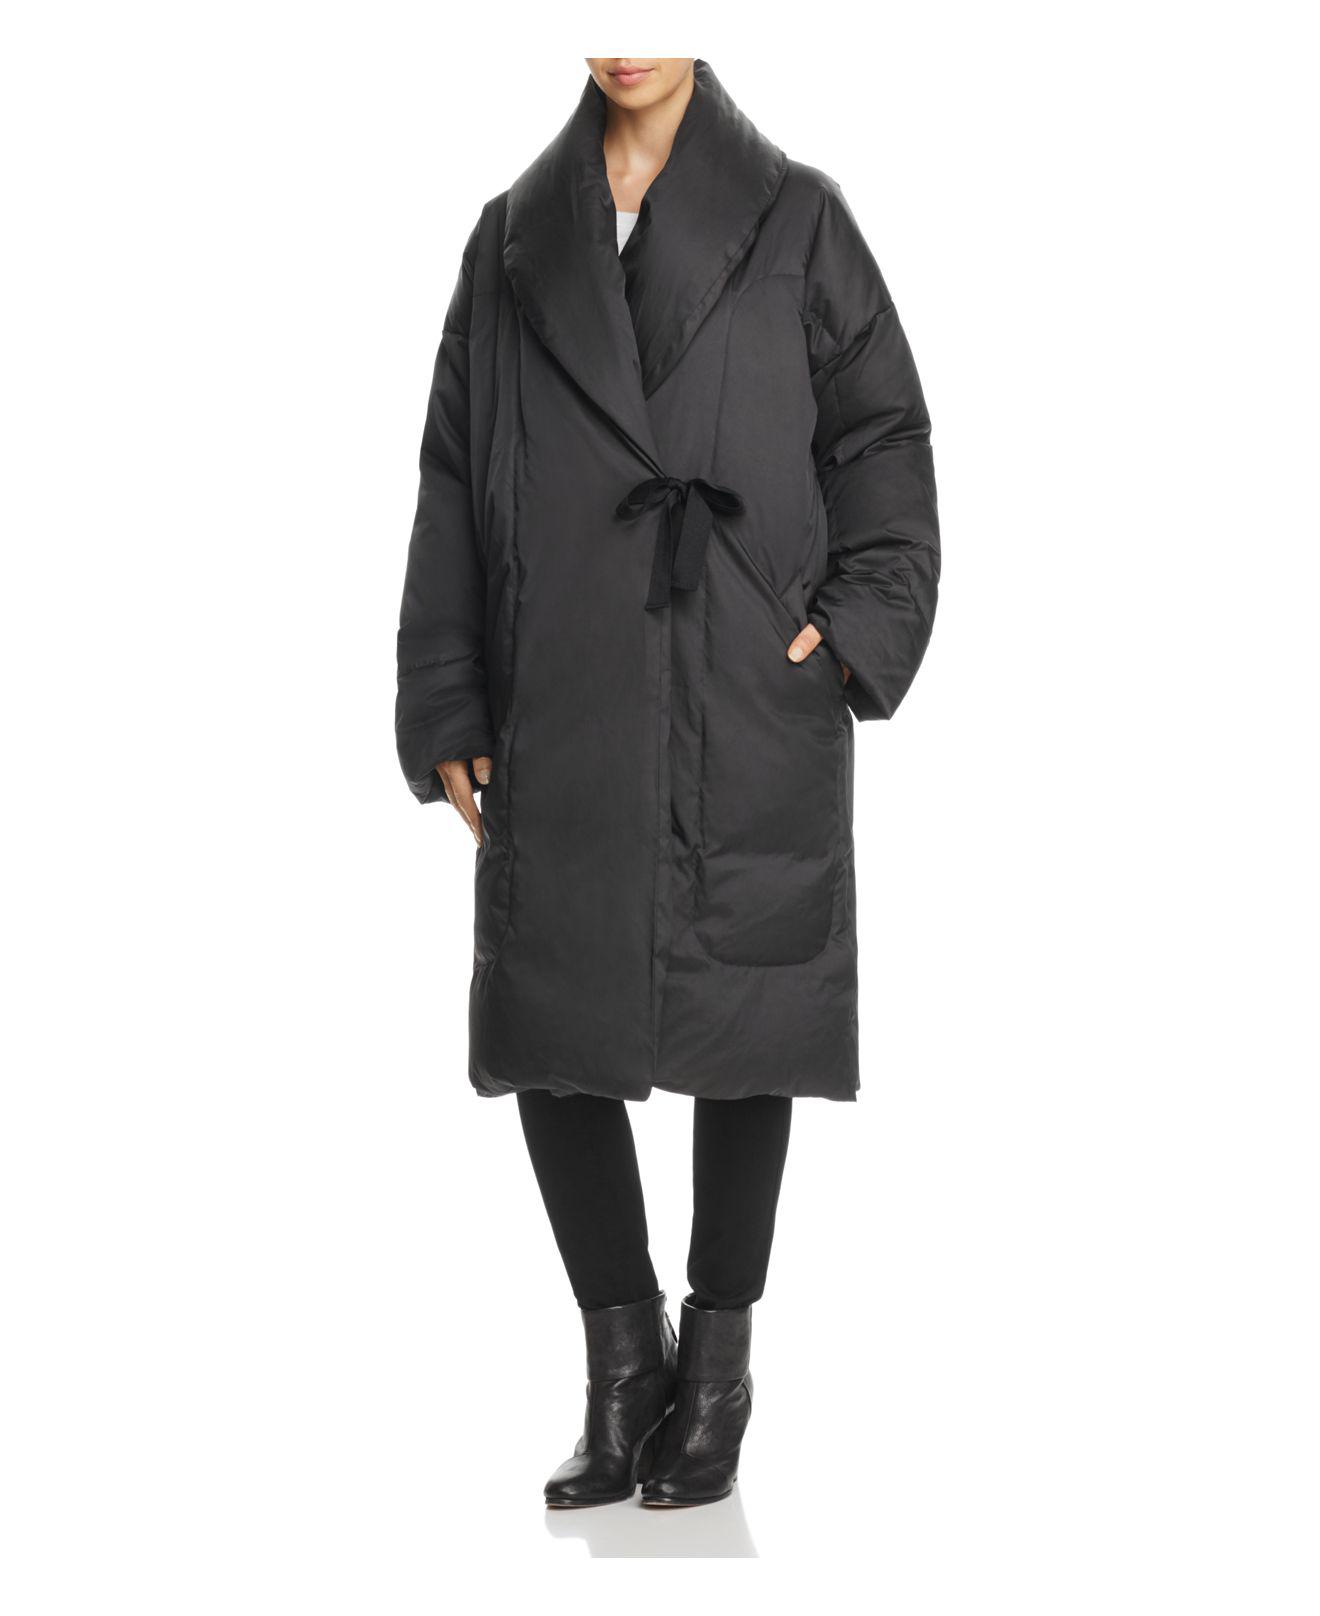 Donna Karan Oversized Puffer Coat in Black - Lyst